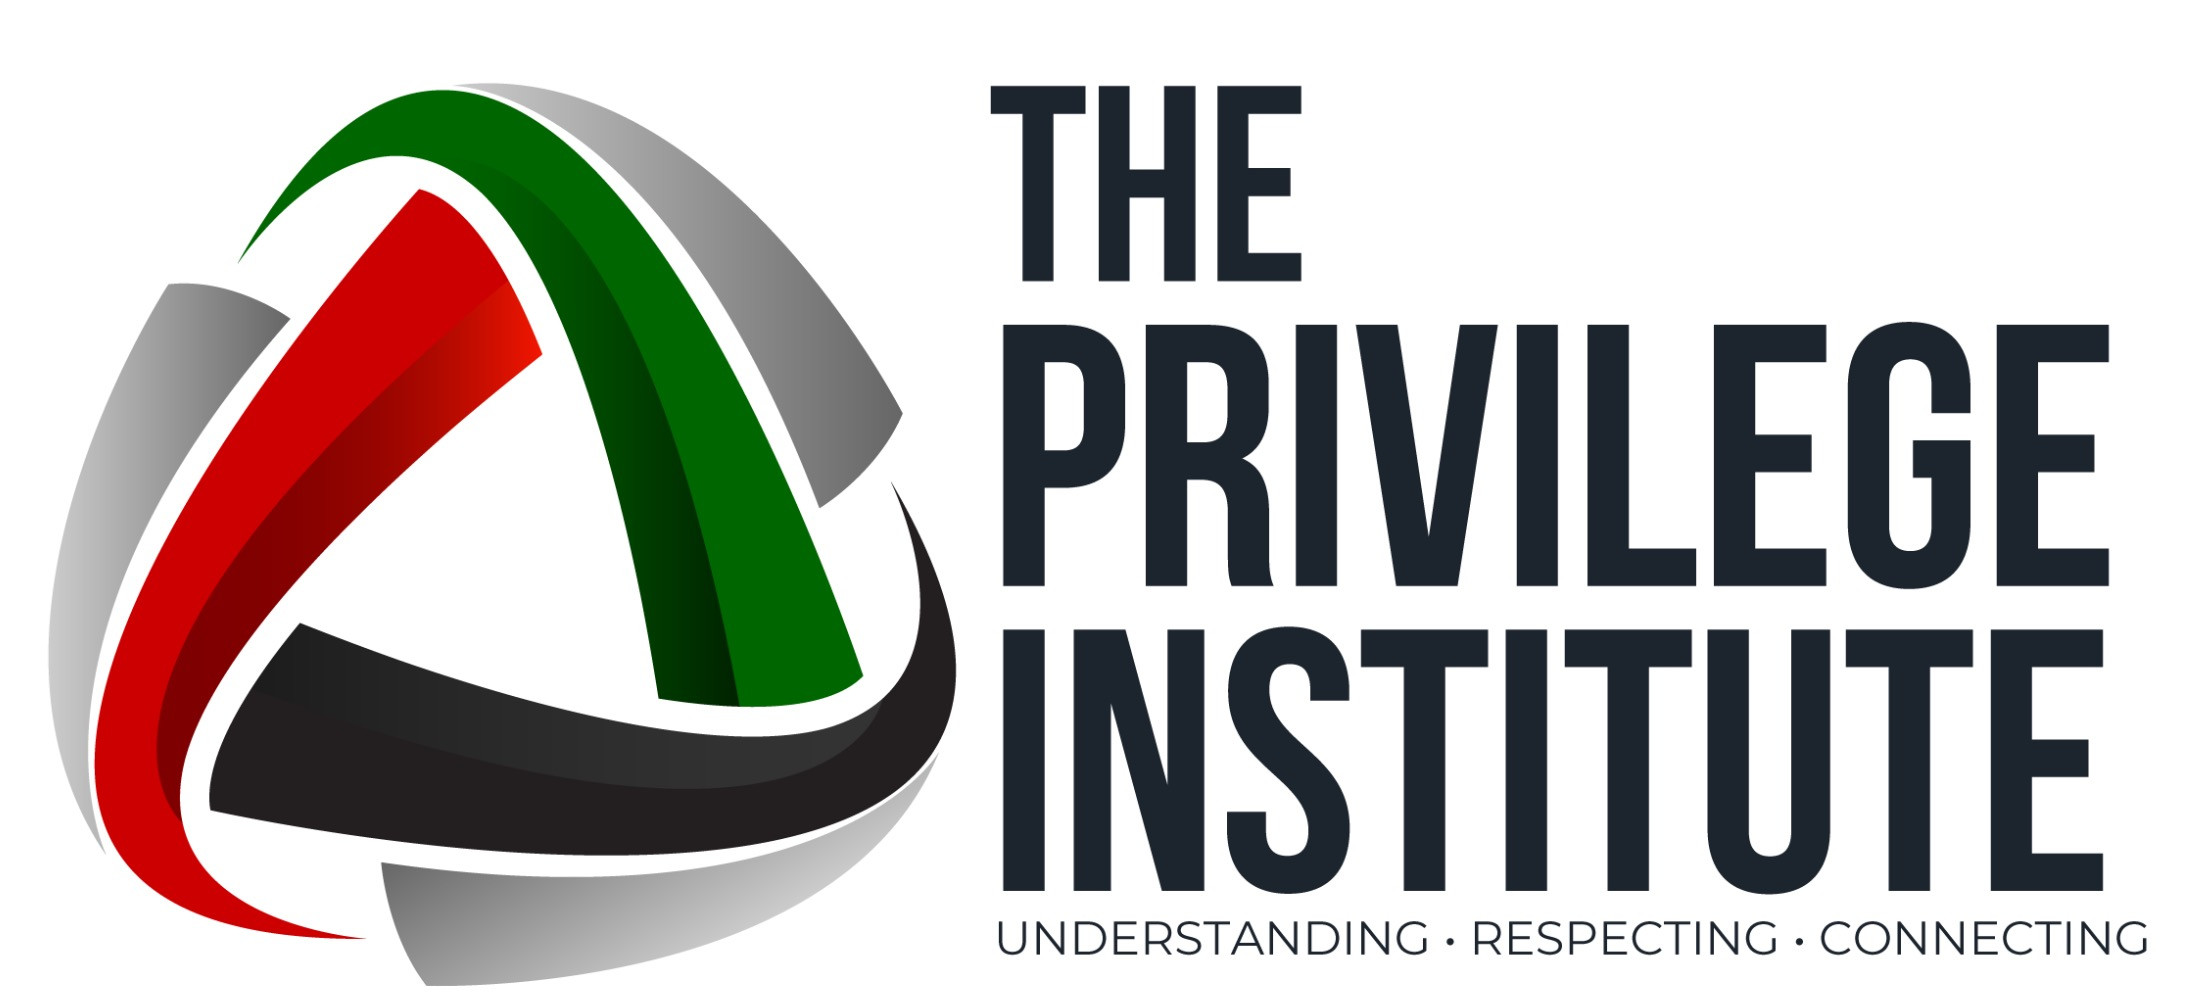 The Privilege Institute